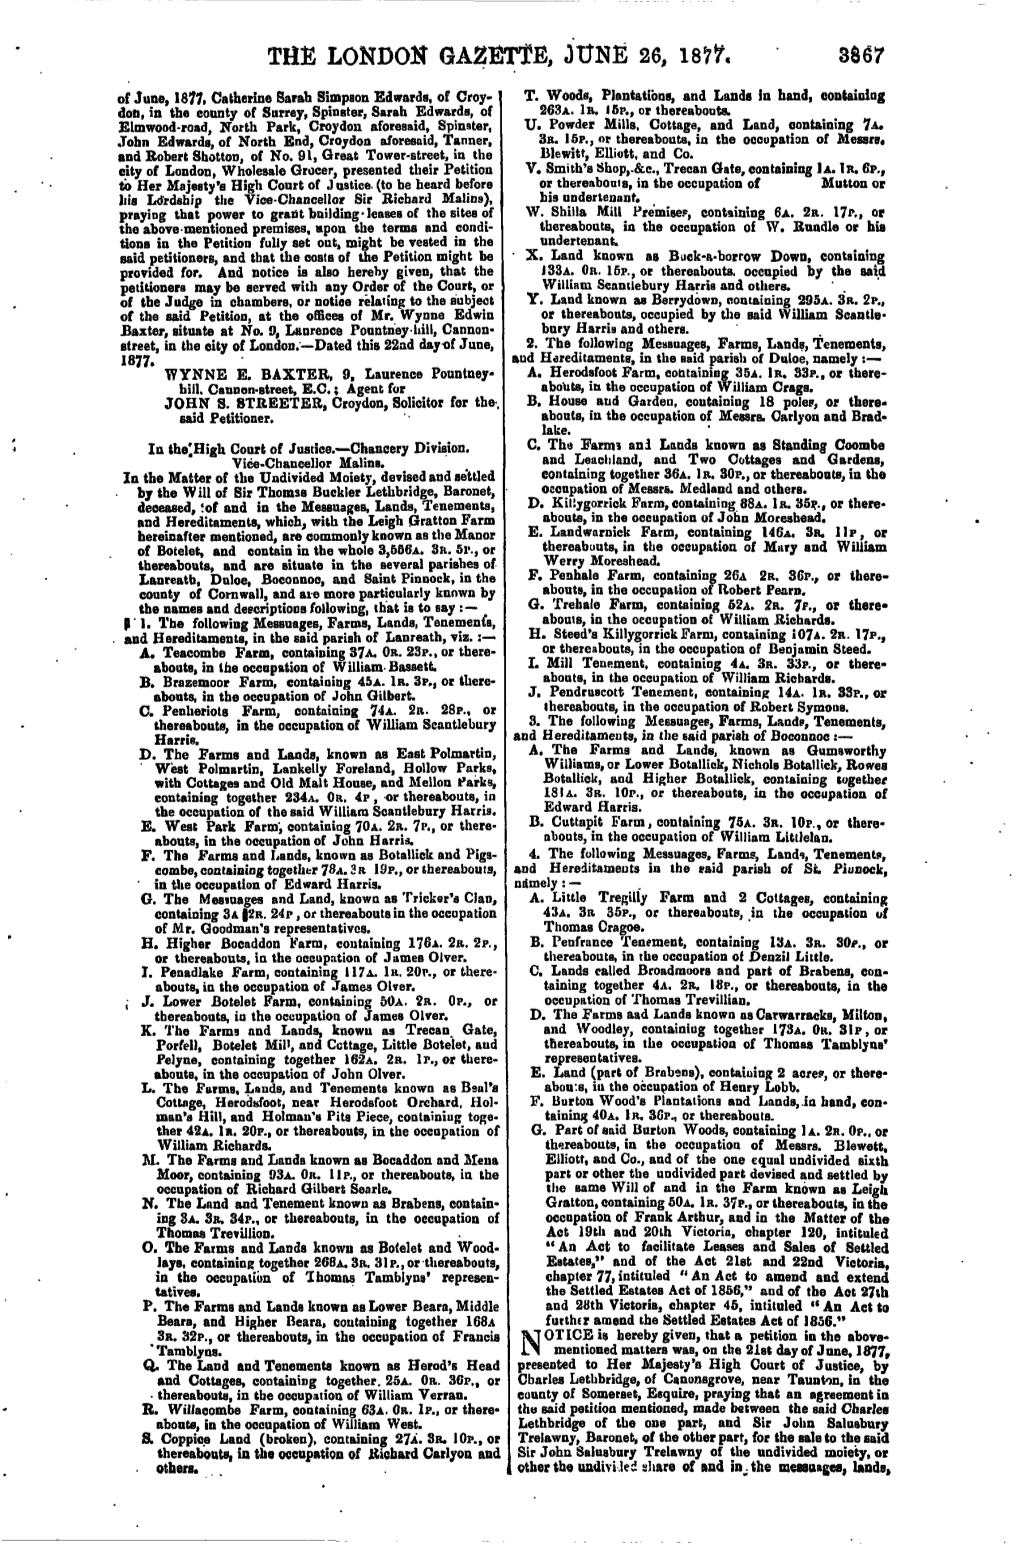 The Londoh Gazette, June 26, 187*. 3867